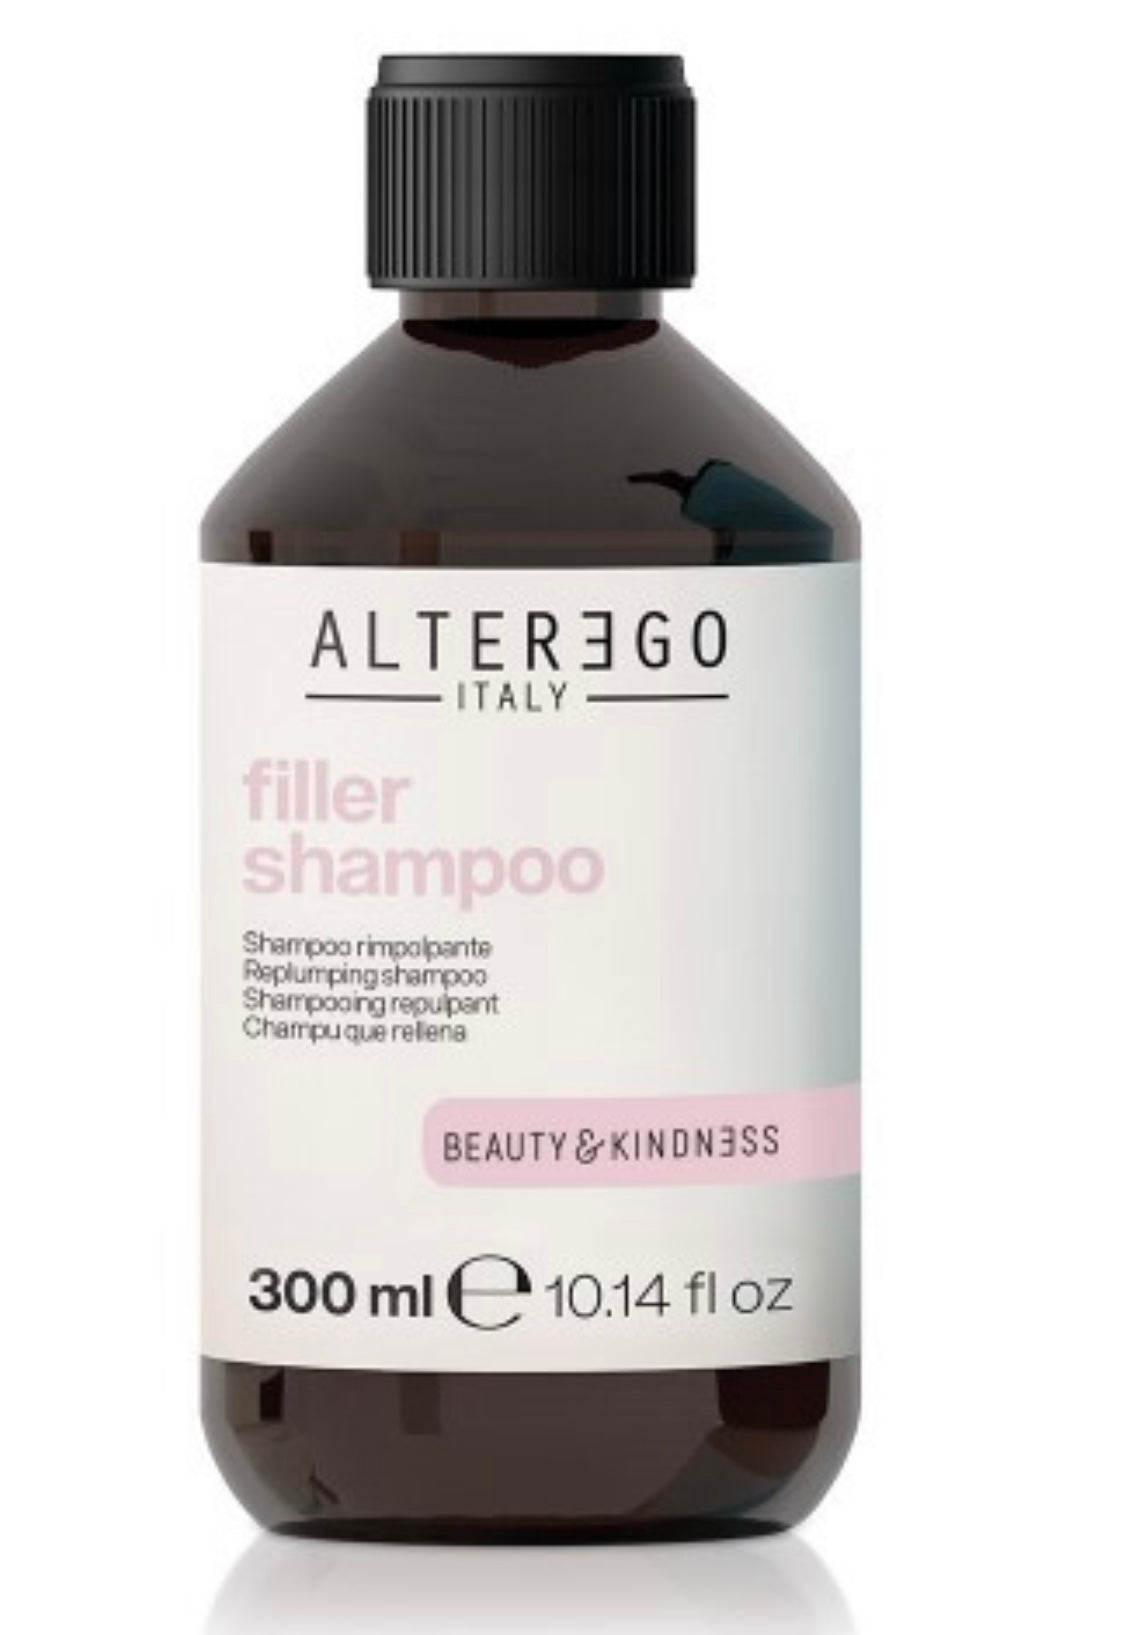 Alterego - Filler shampoo 10.14 fl. oz. / 300 ml